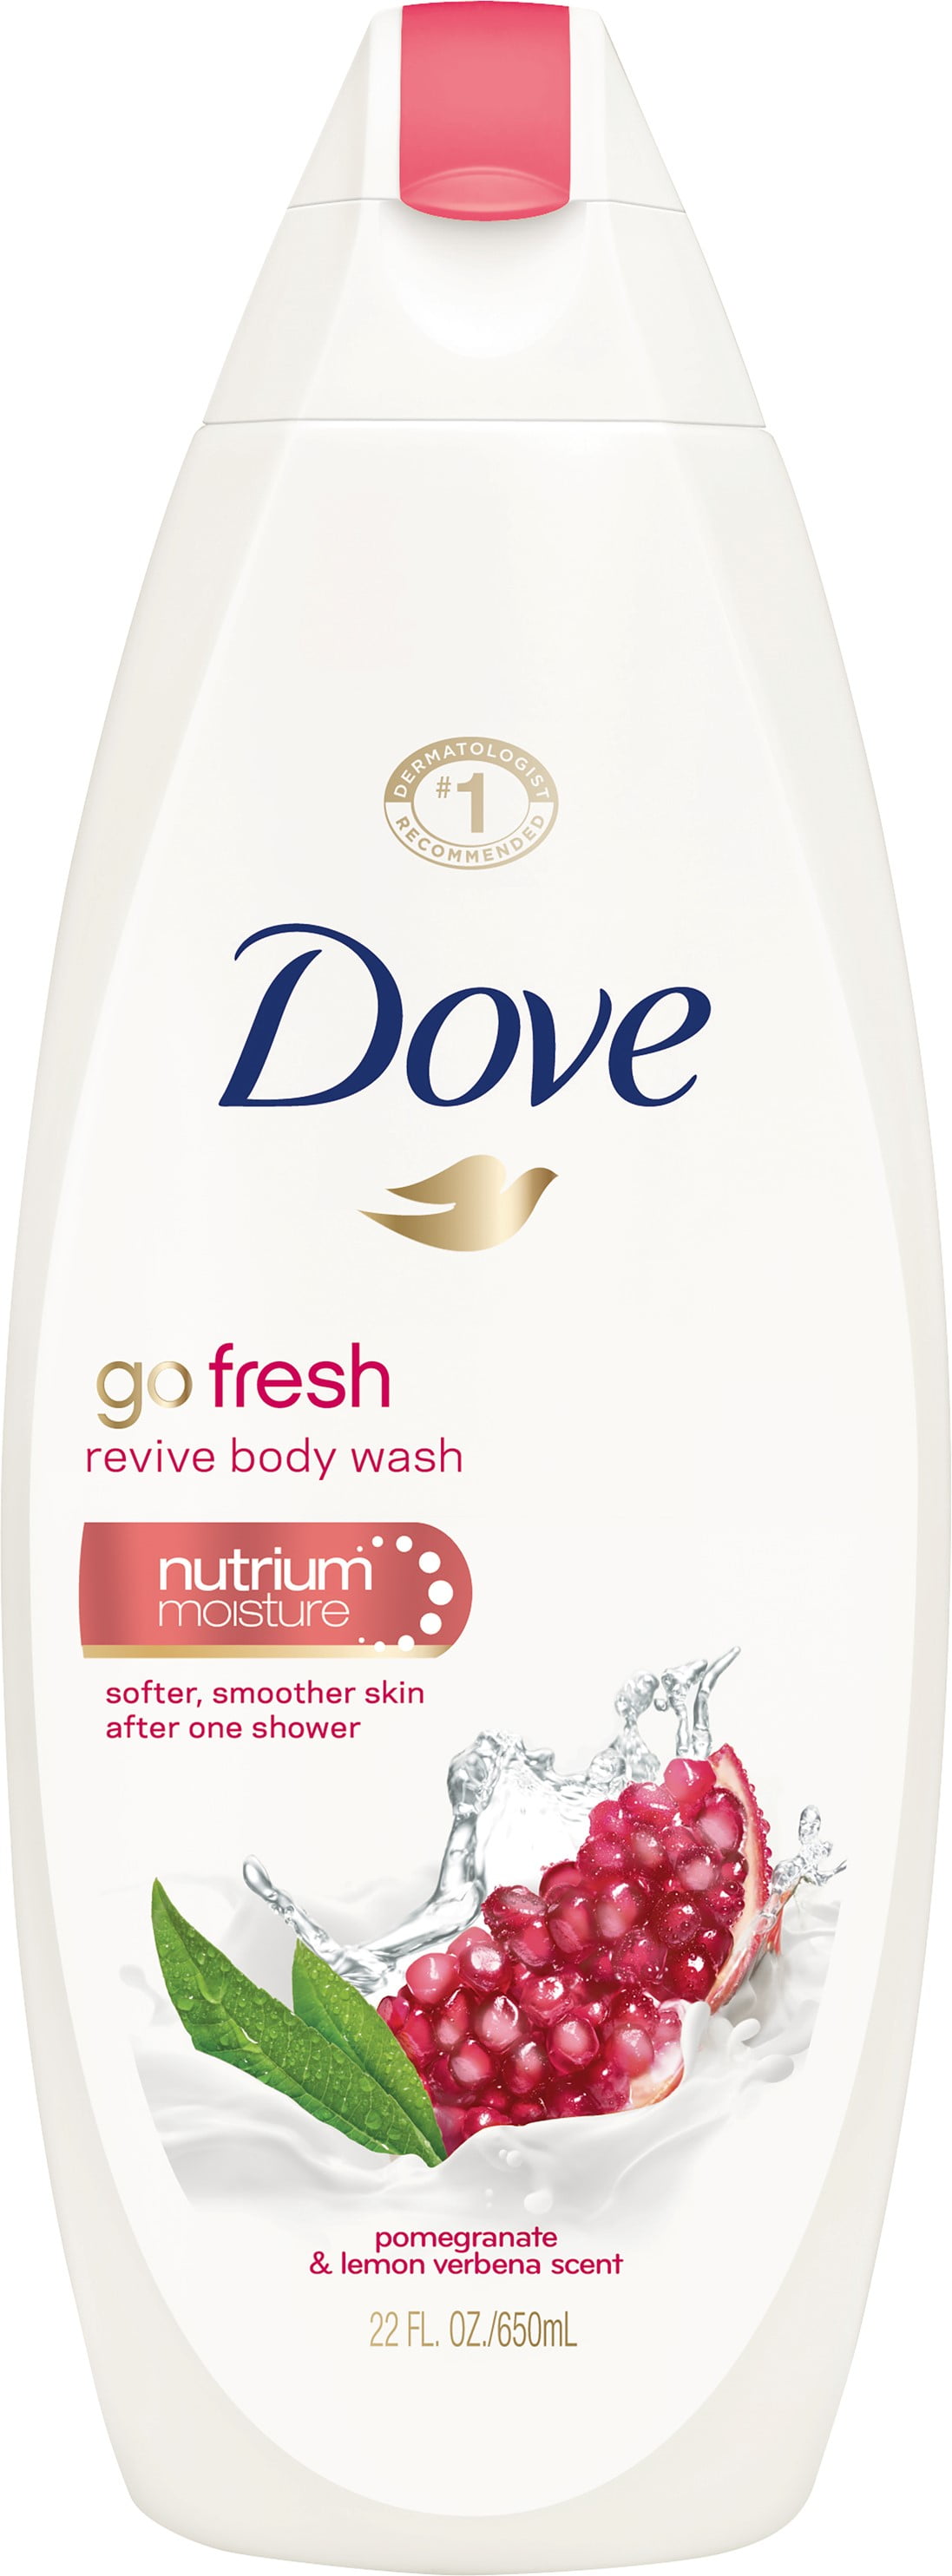 Dove Go Fresh Revive Body Wash, Pomegranate & Lemon Verbena 22 oz (Pack of  3)